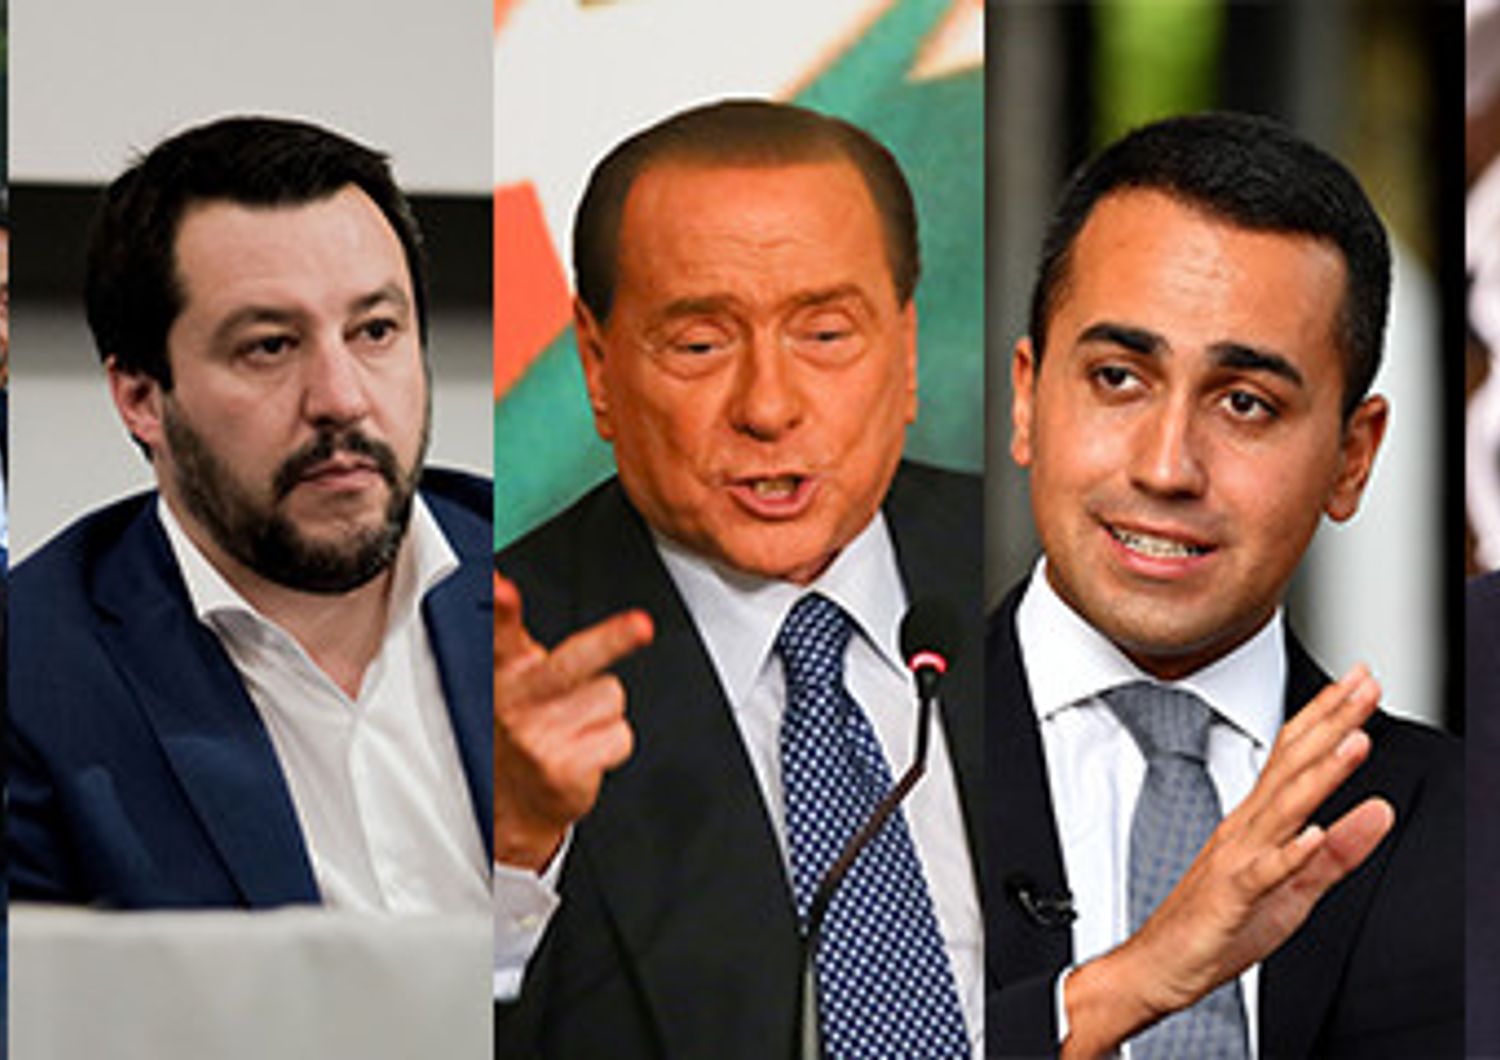 Renzi - Salvini - Berlusconi - Di Maio - Grasso&nbsp;